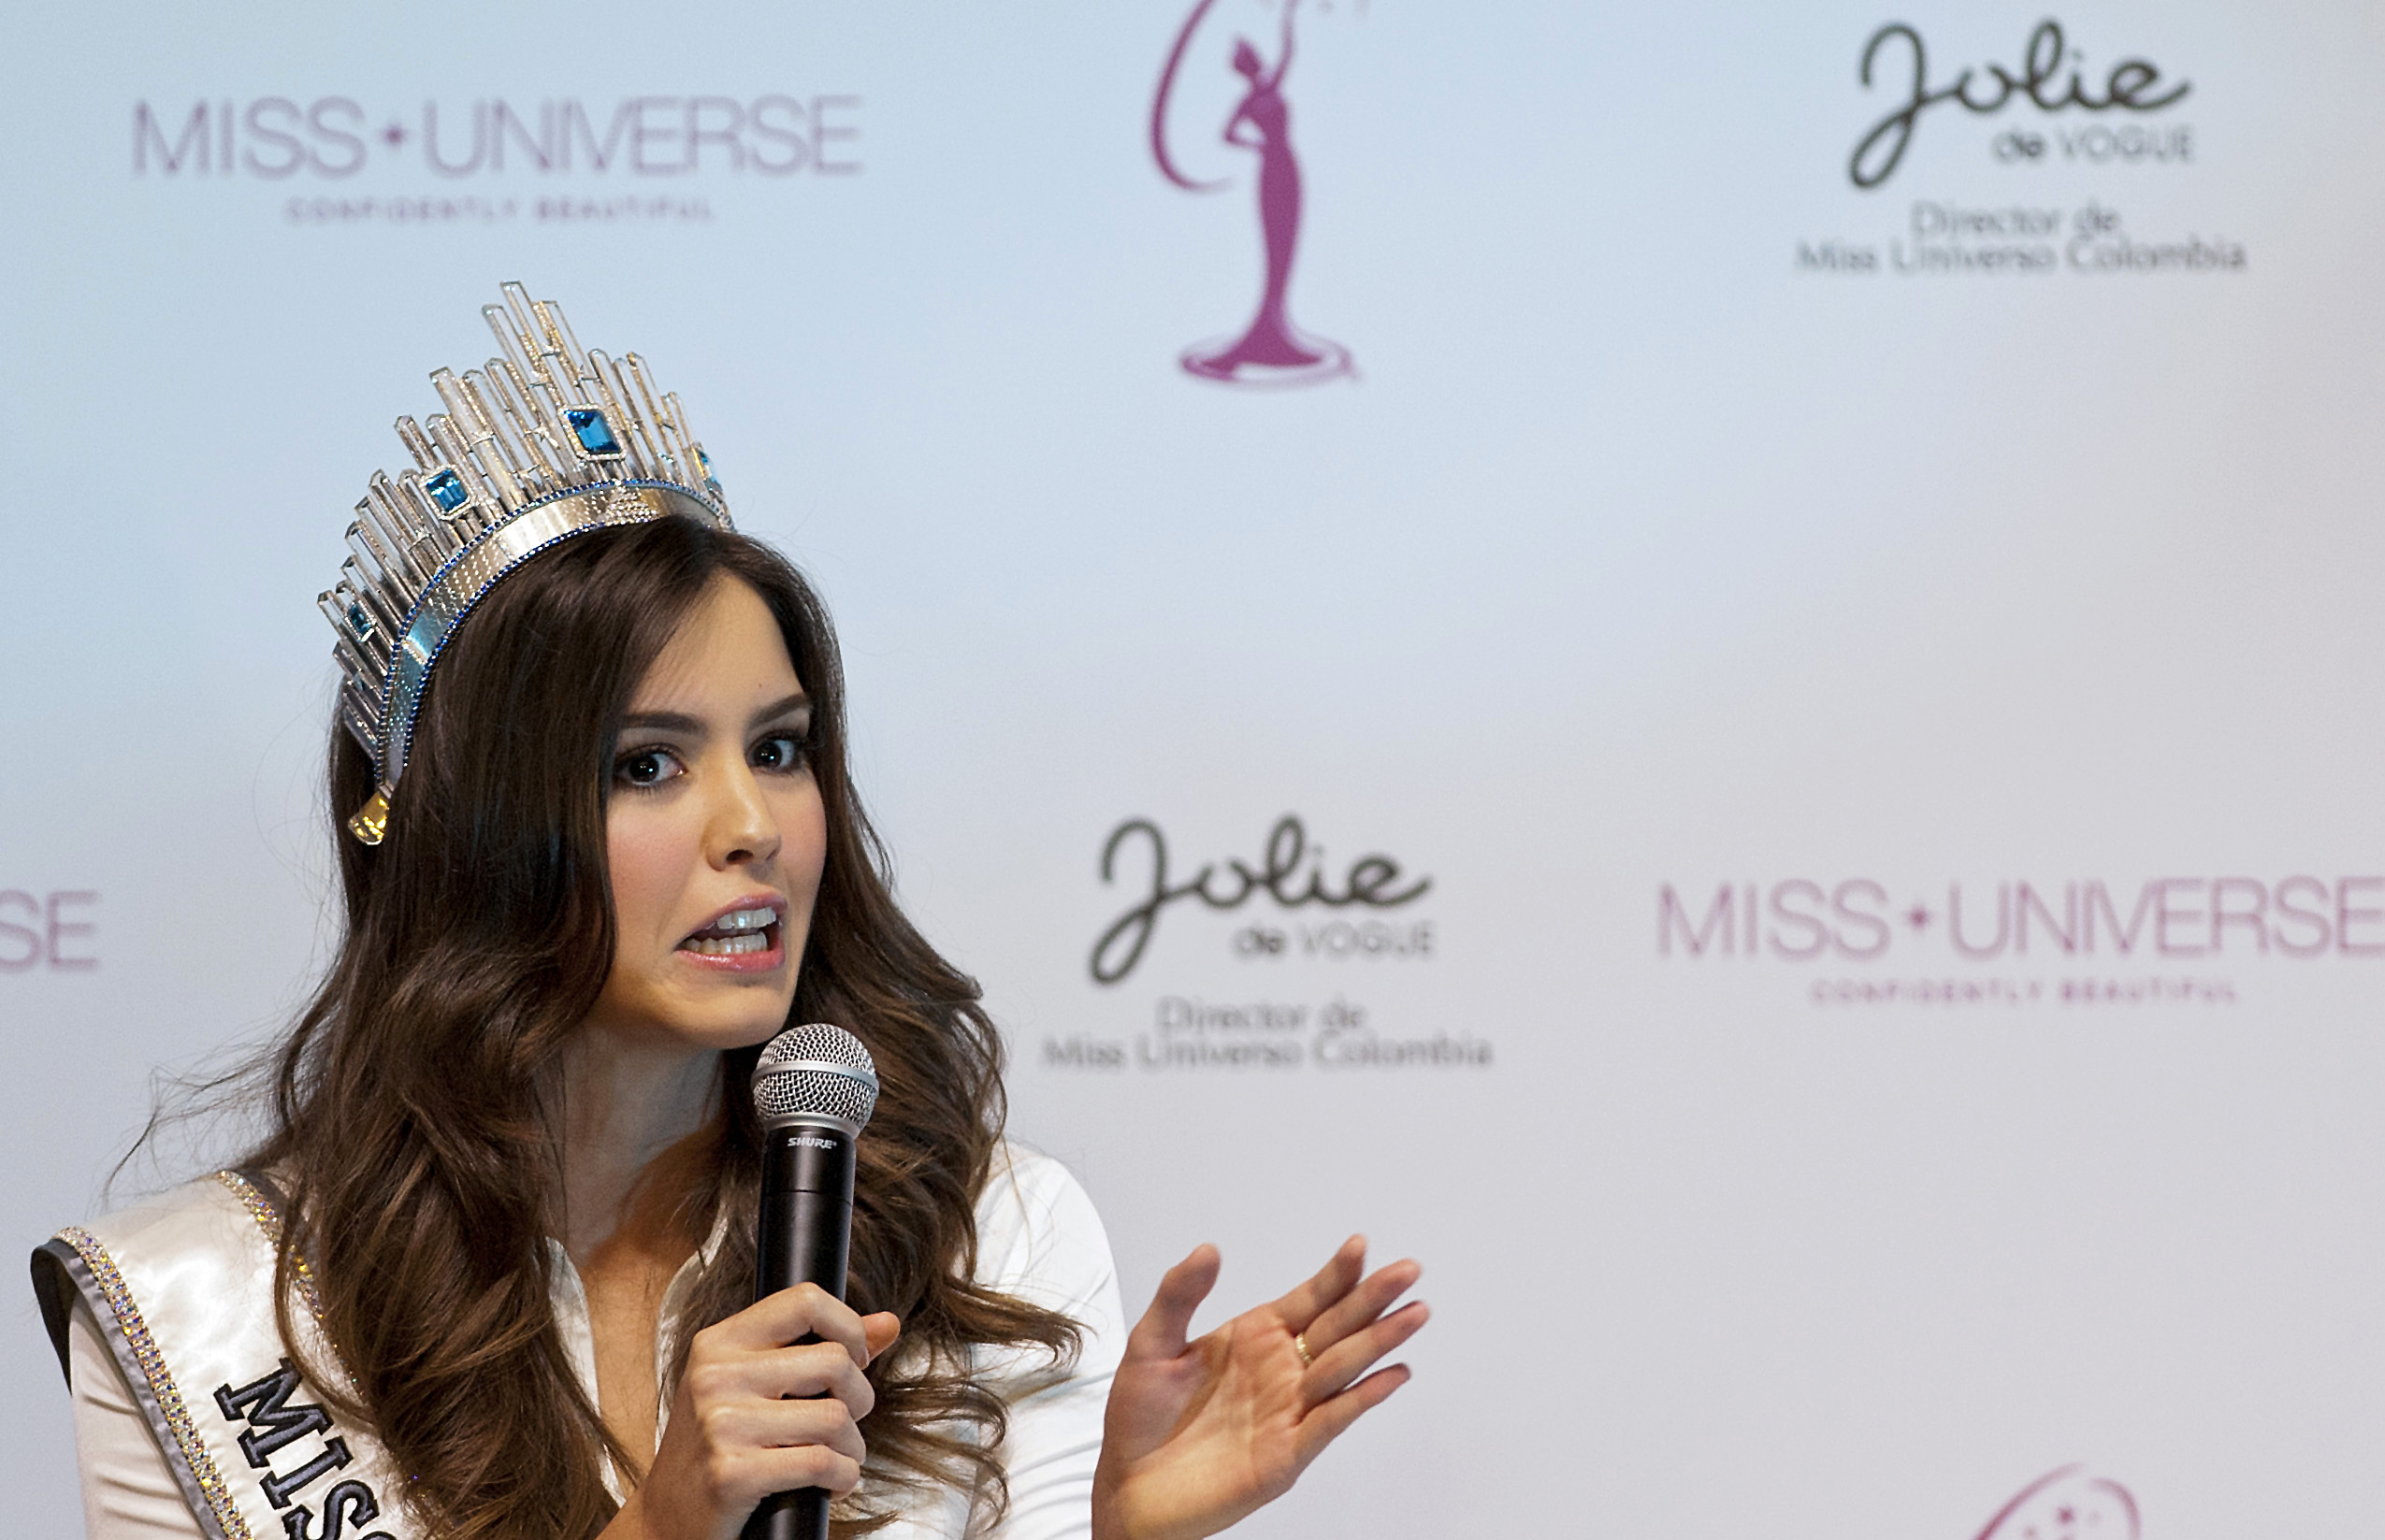 Firma de cosméticos apoya a Miss Universo por su postura ante Donald Trump